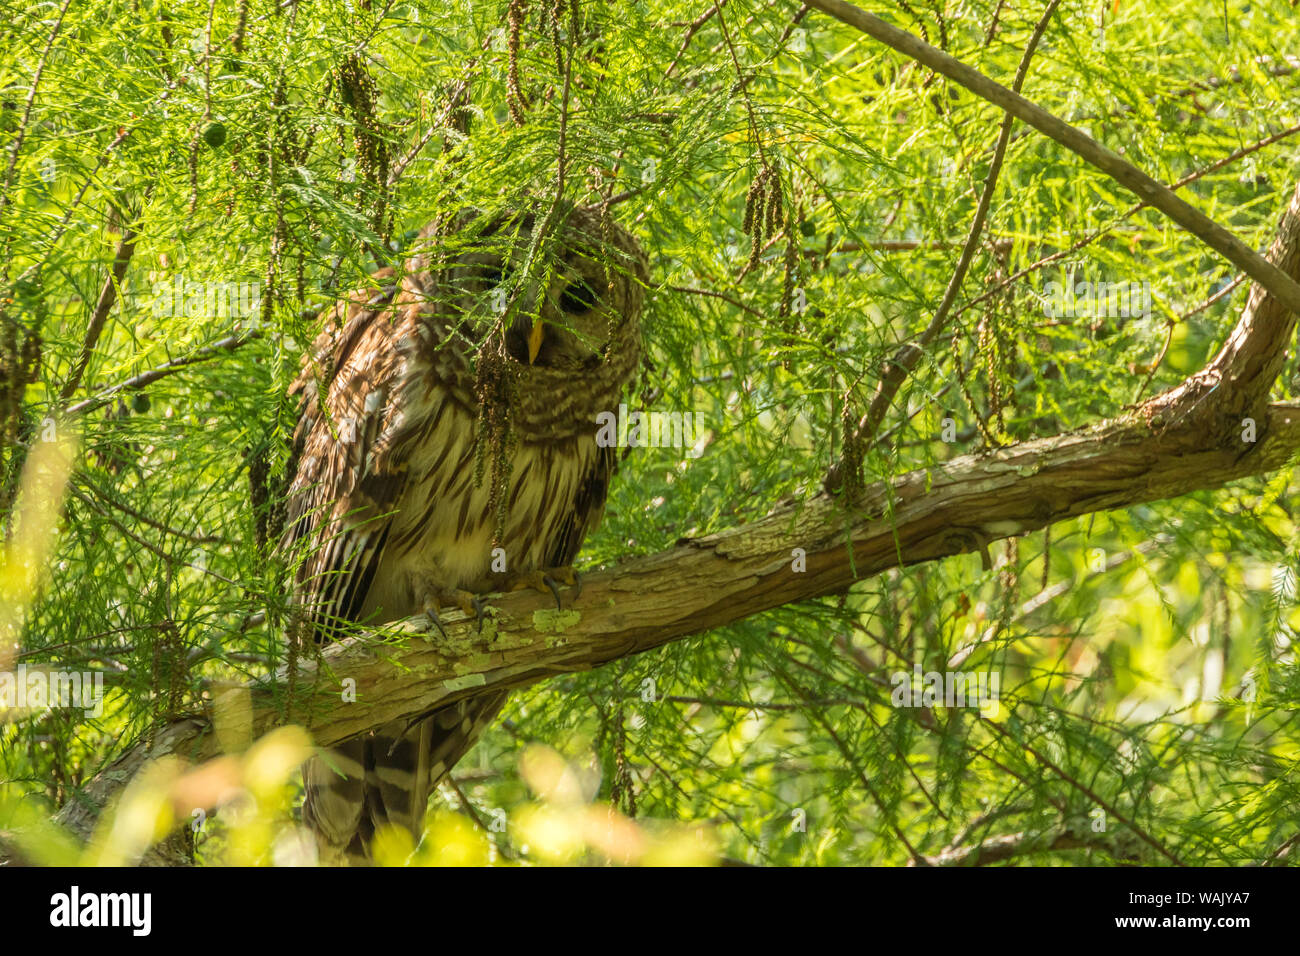 USA, Louisiana, Atchafalaya National Wildlife Refuge. Barred owl in tree. Credit as: Cathy and Gordon Illg / Jaynes Gallery / DanitaDelimont.com Stock Photo